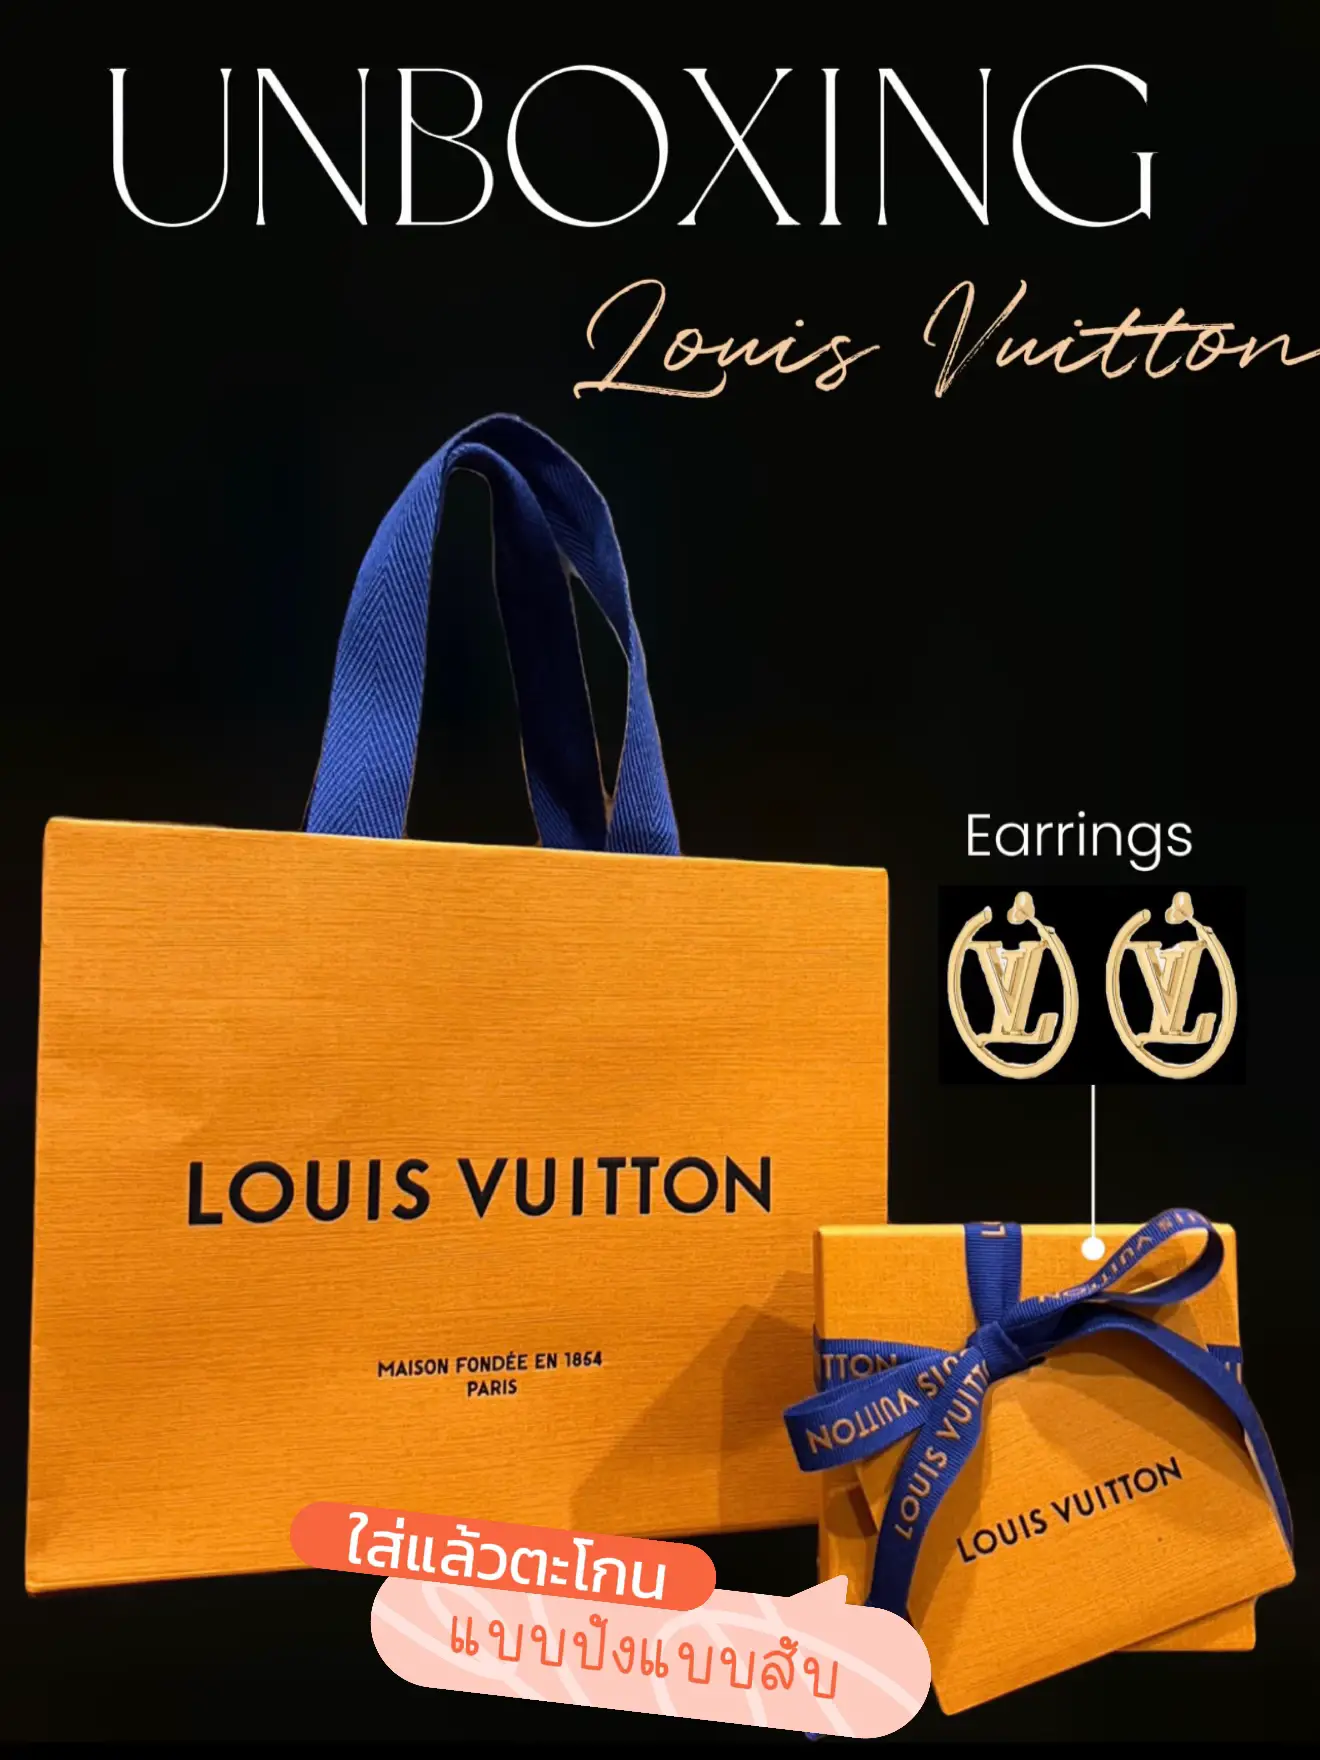 UNBOXING: LOUIS VUITTON LOUISE HOOP EARRINGS, 3 YEAR REVIEW!